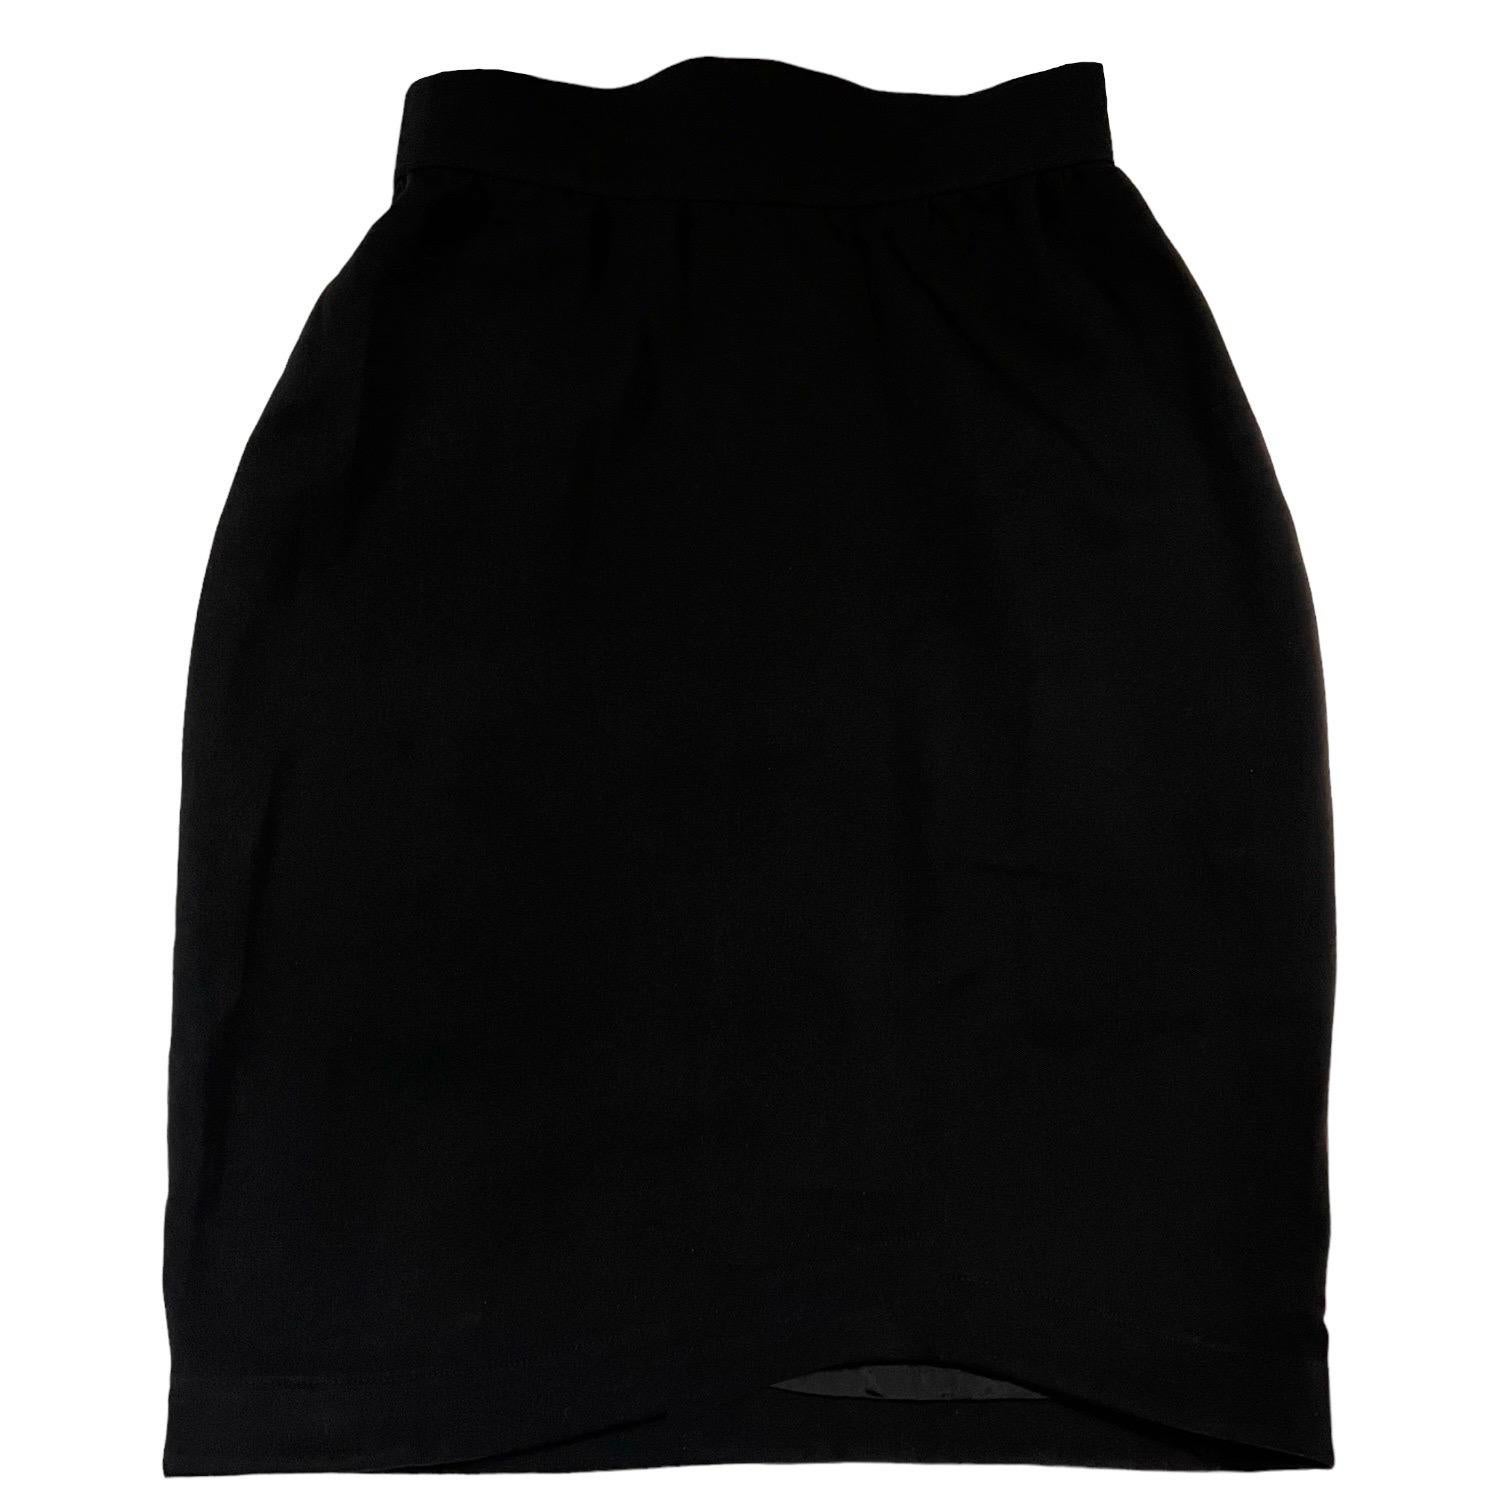 F/W 1989 Thierry Mugler Black Futuristic Bullet Skirt Suit 9